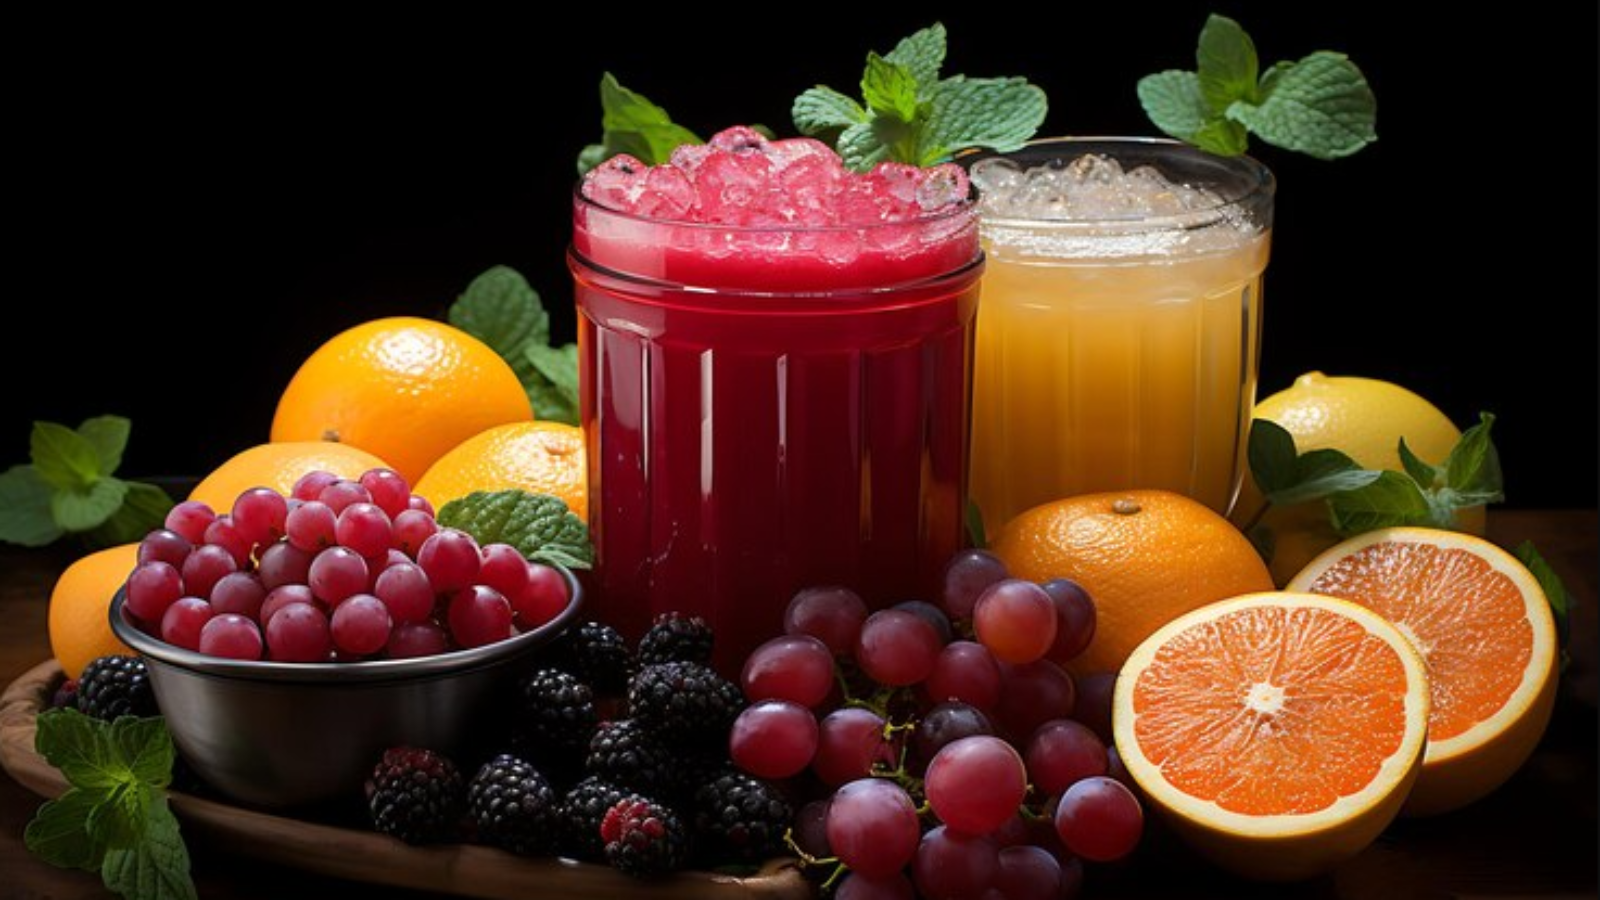 homemade-fruit-juice-food-photography_753066-3624-jpg-740×493-